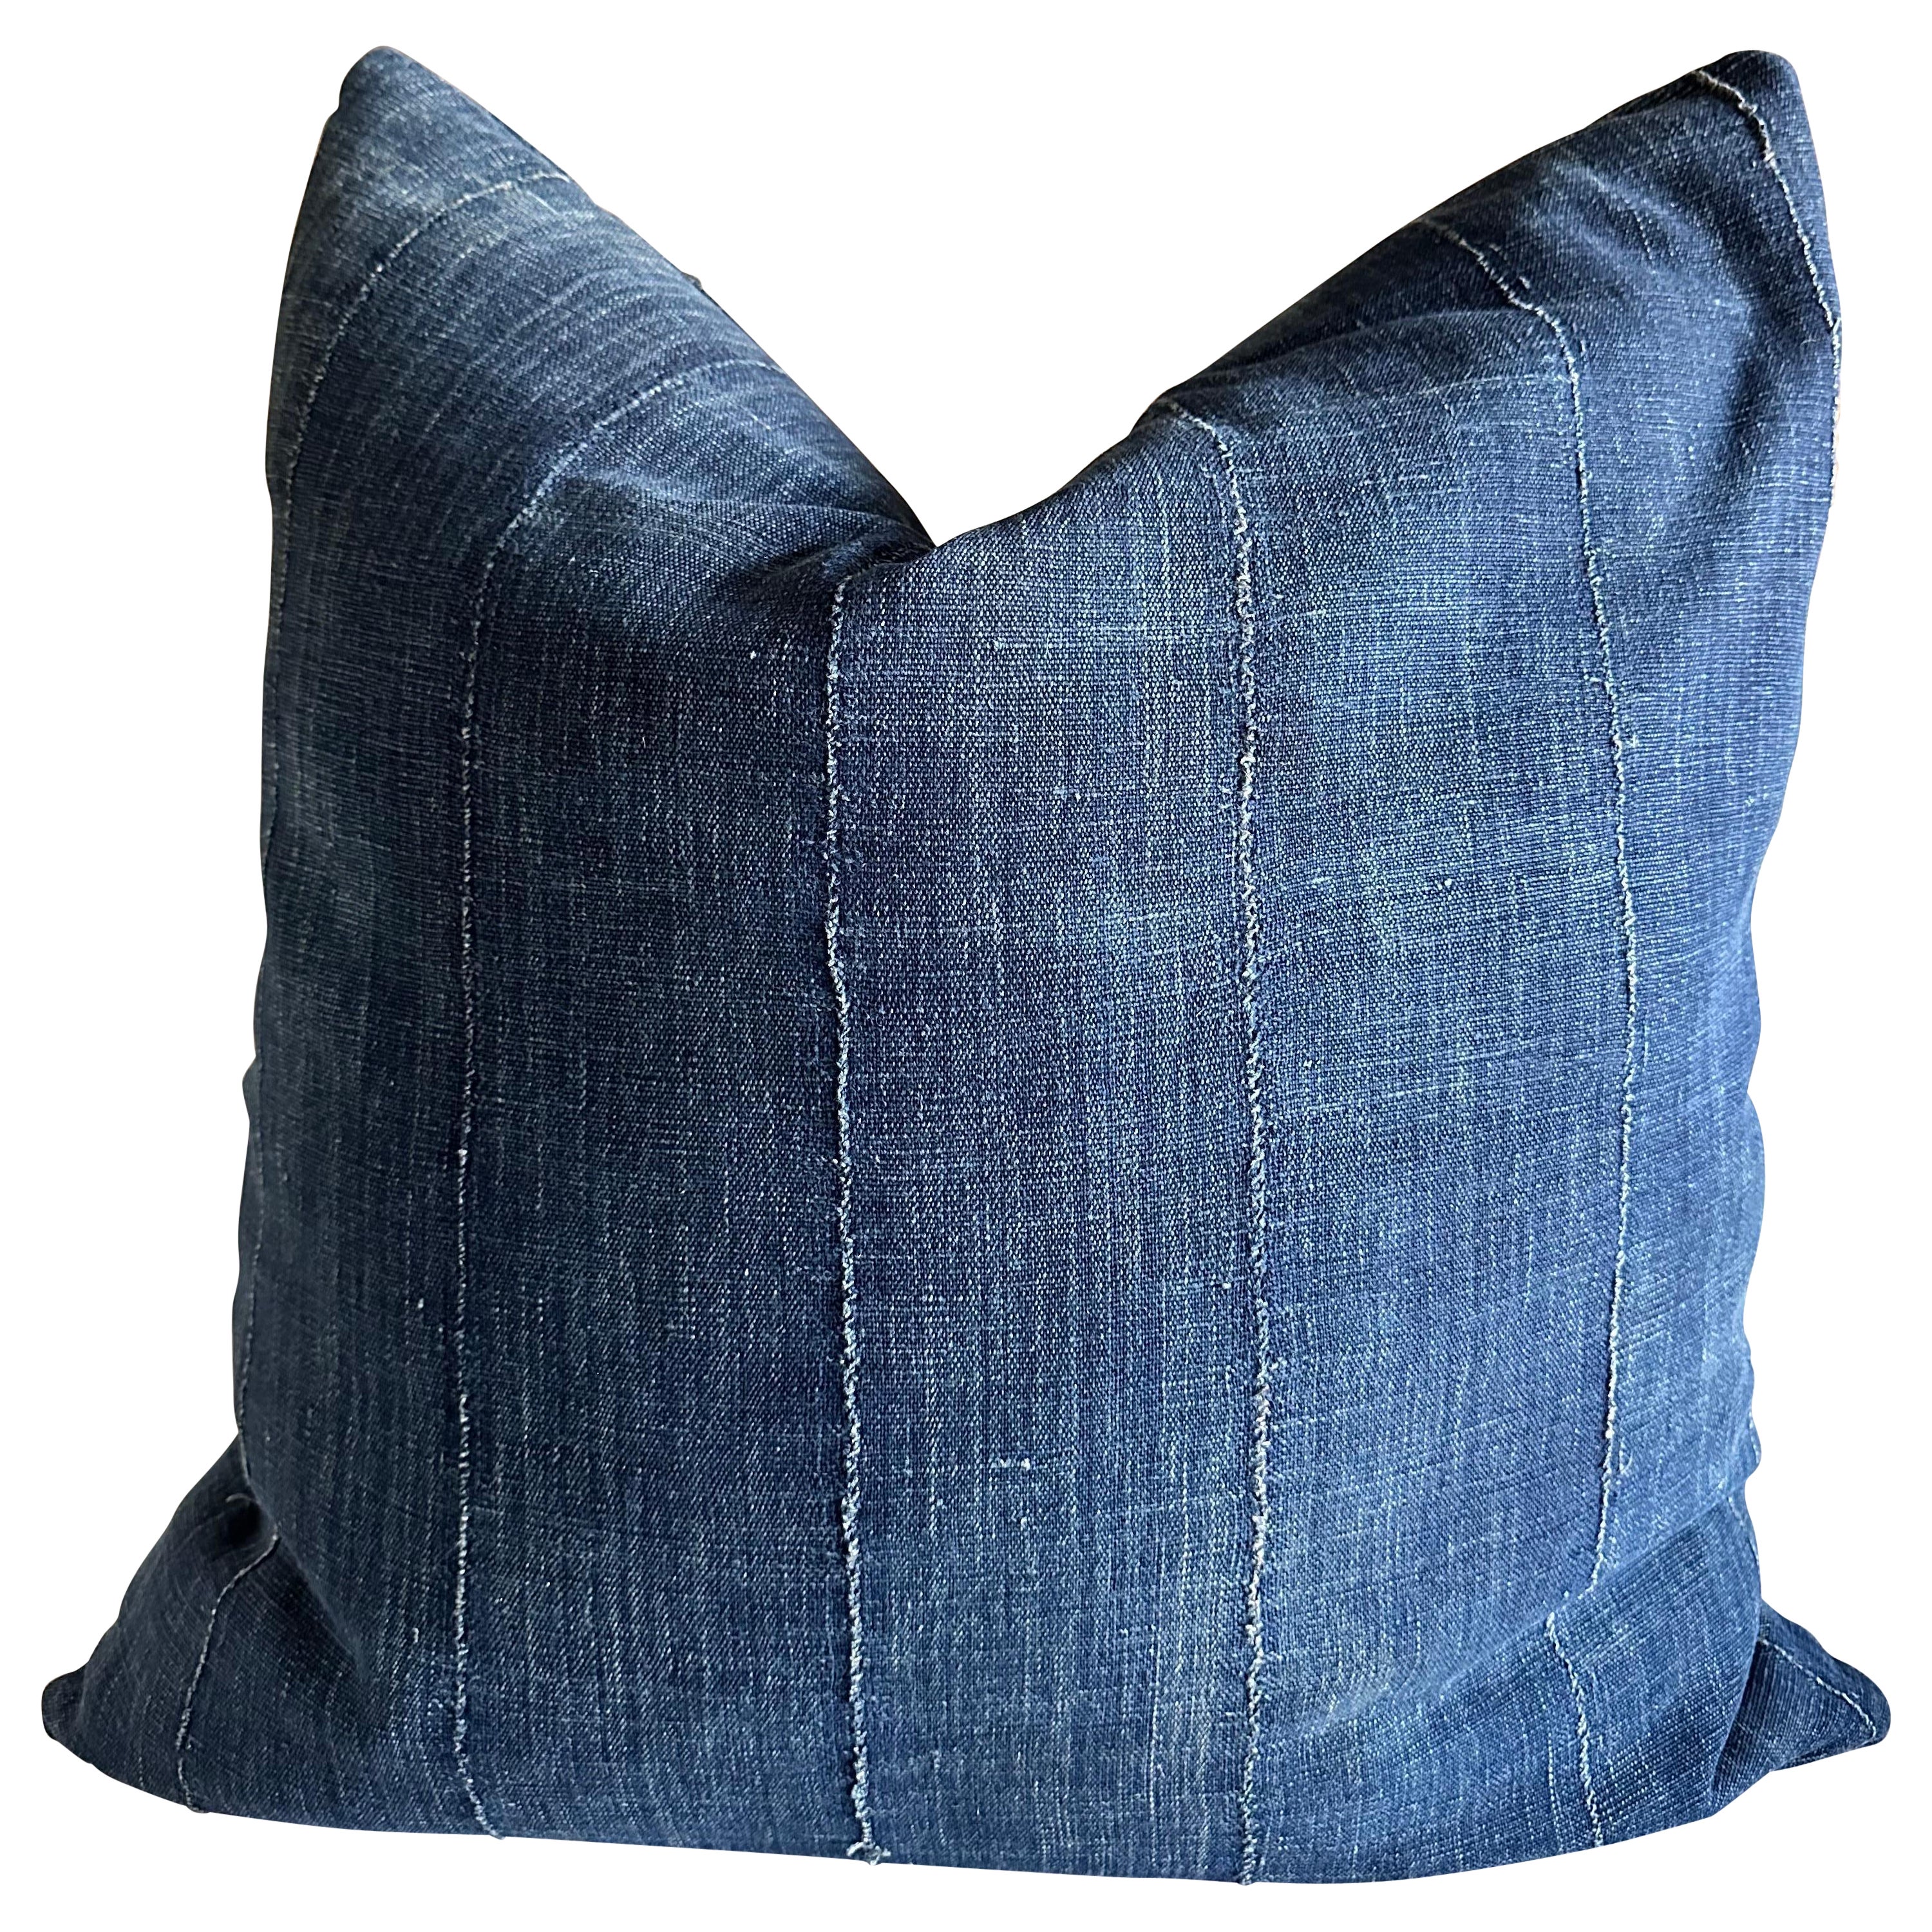 Euro Size Pillow Shams Made from Vintage Japanese Boro Fabrics